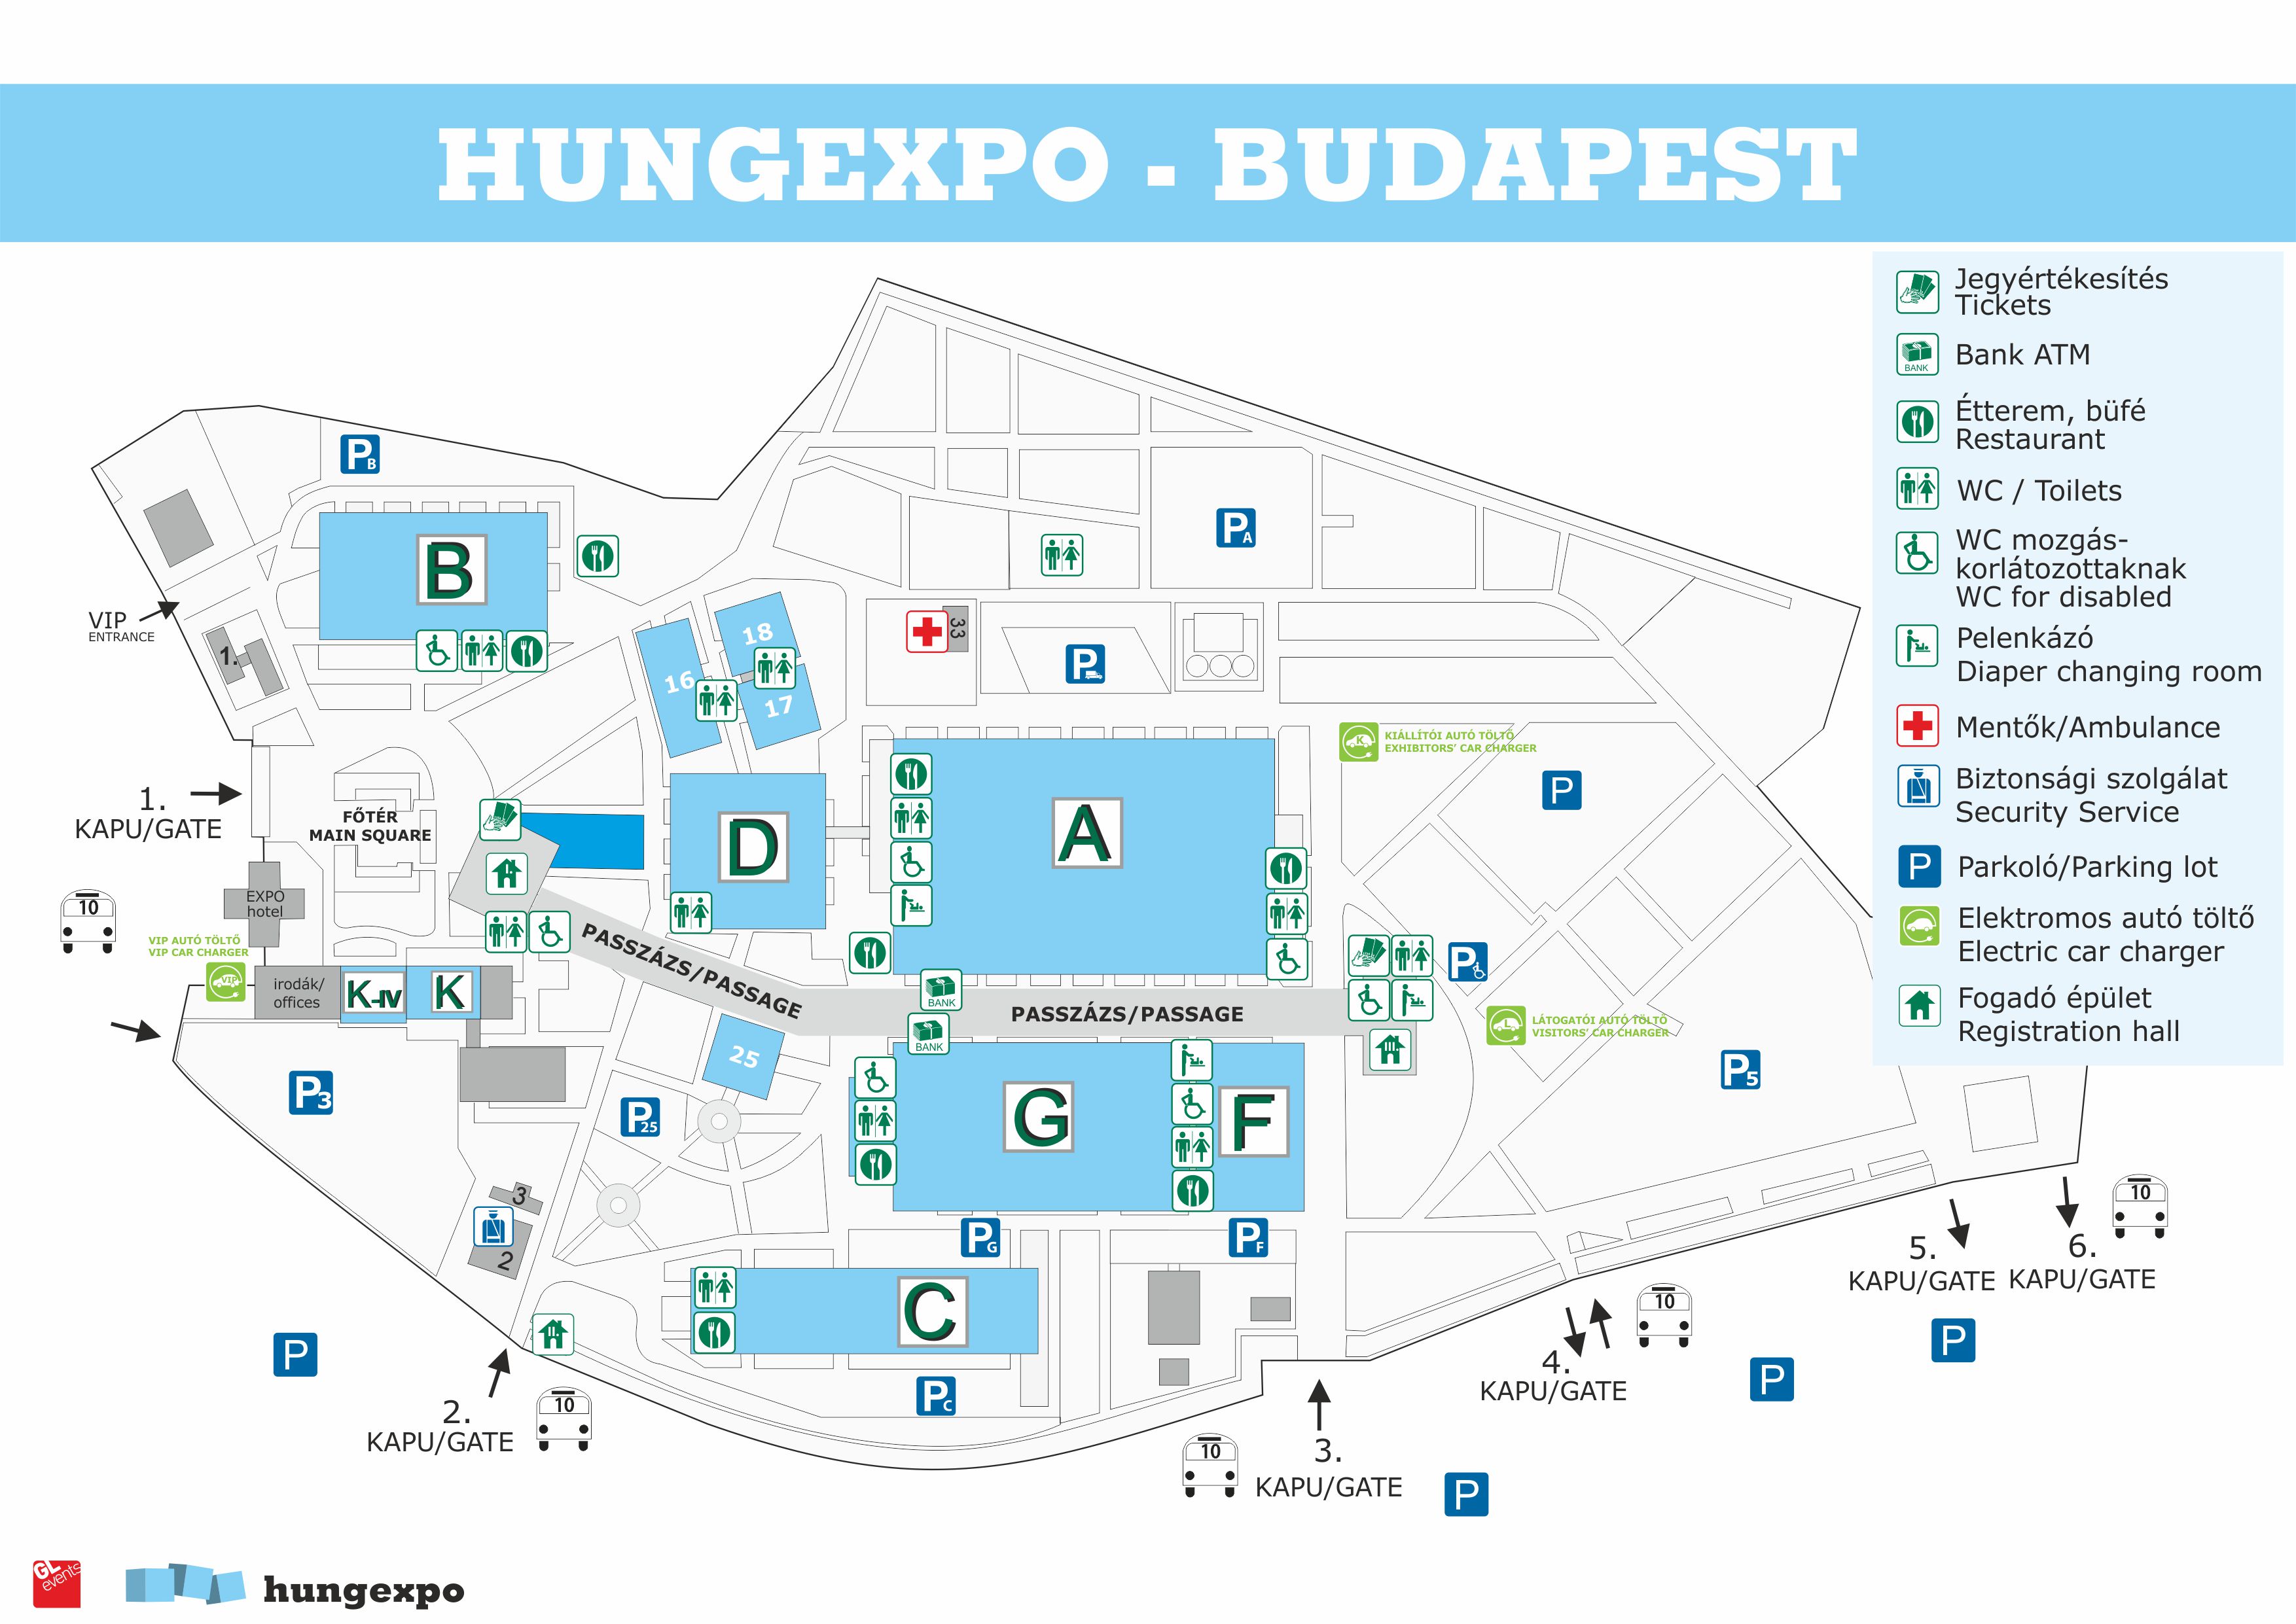 budapest térkép hungexpo Hungexpo   Electric car charger station – A novelty in the car  budapest térkép hungexpo